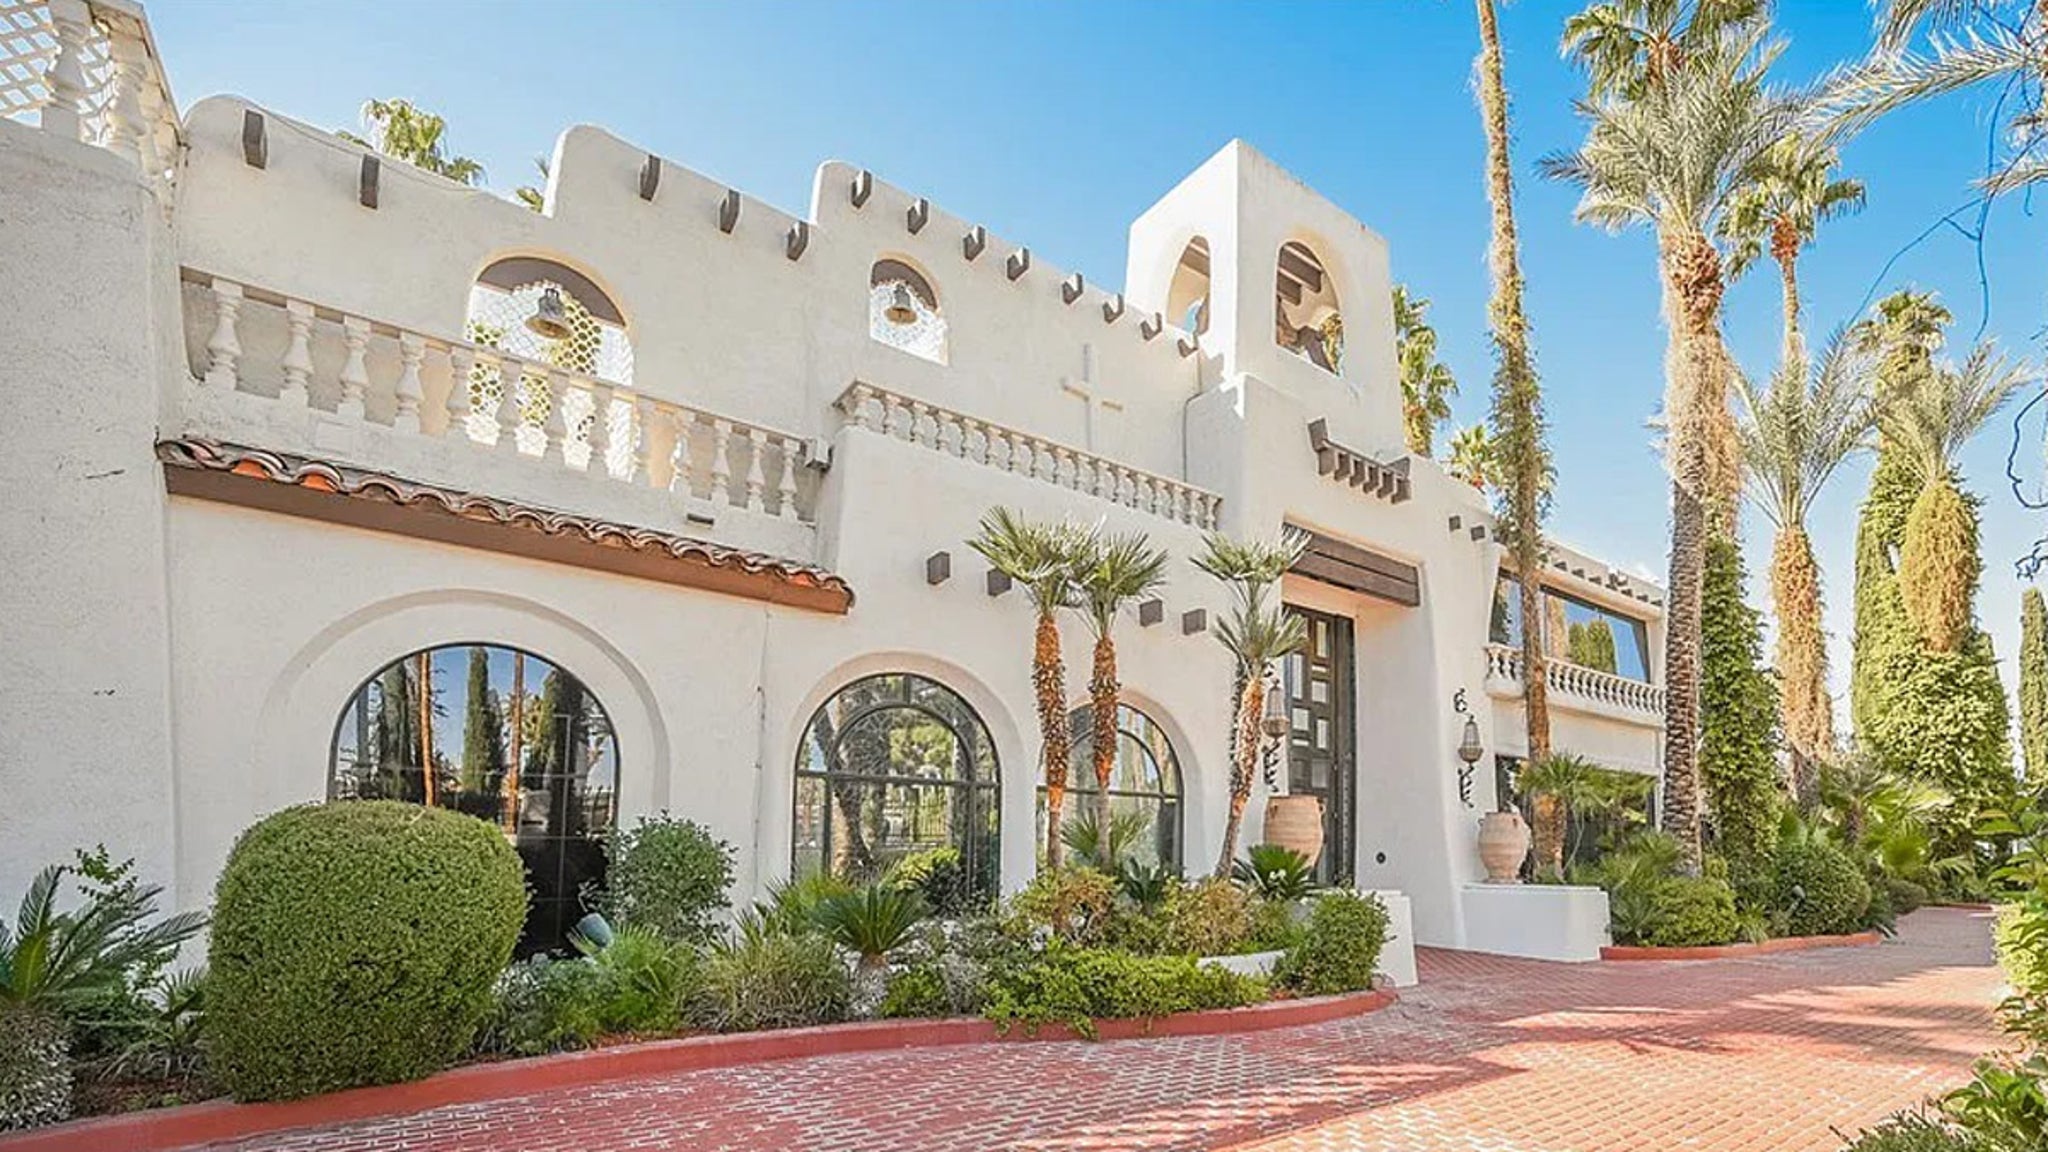 Siegfried & Roy’s ‘Jungle Palace’ Las Vegas mansion sells for $3 million